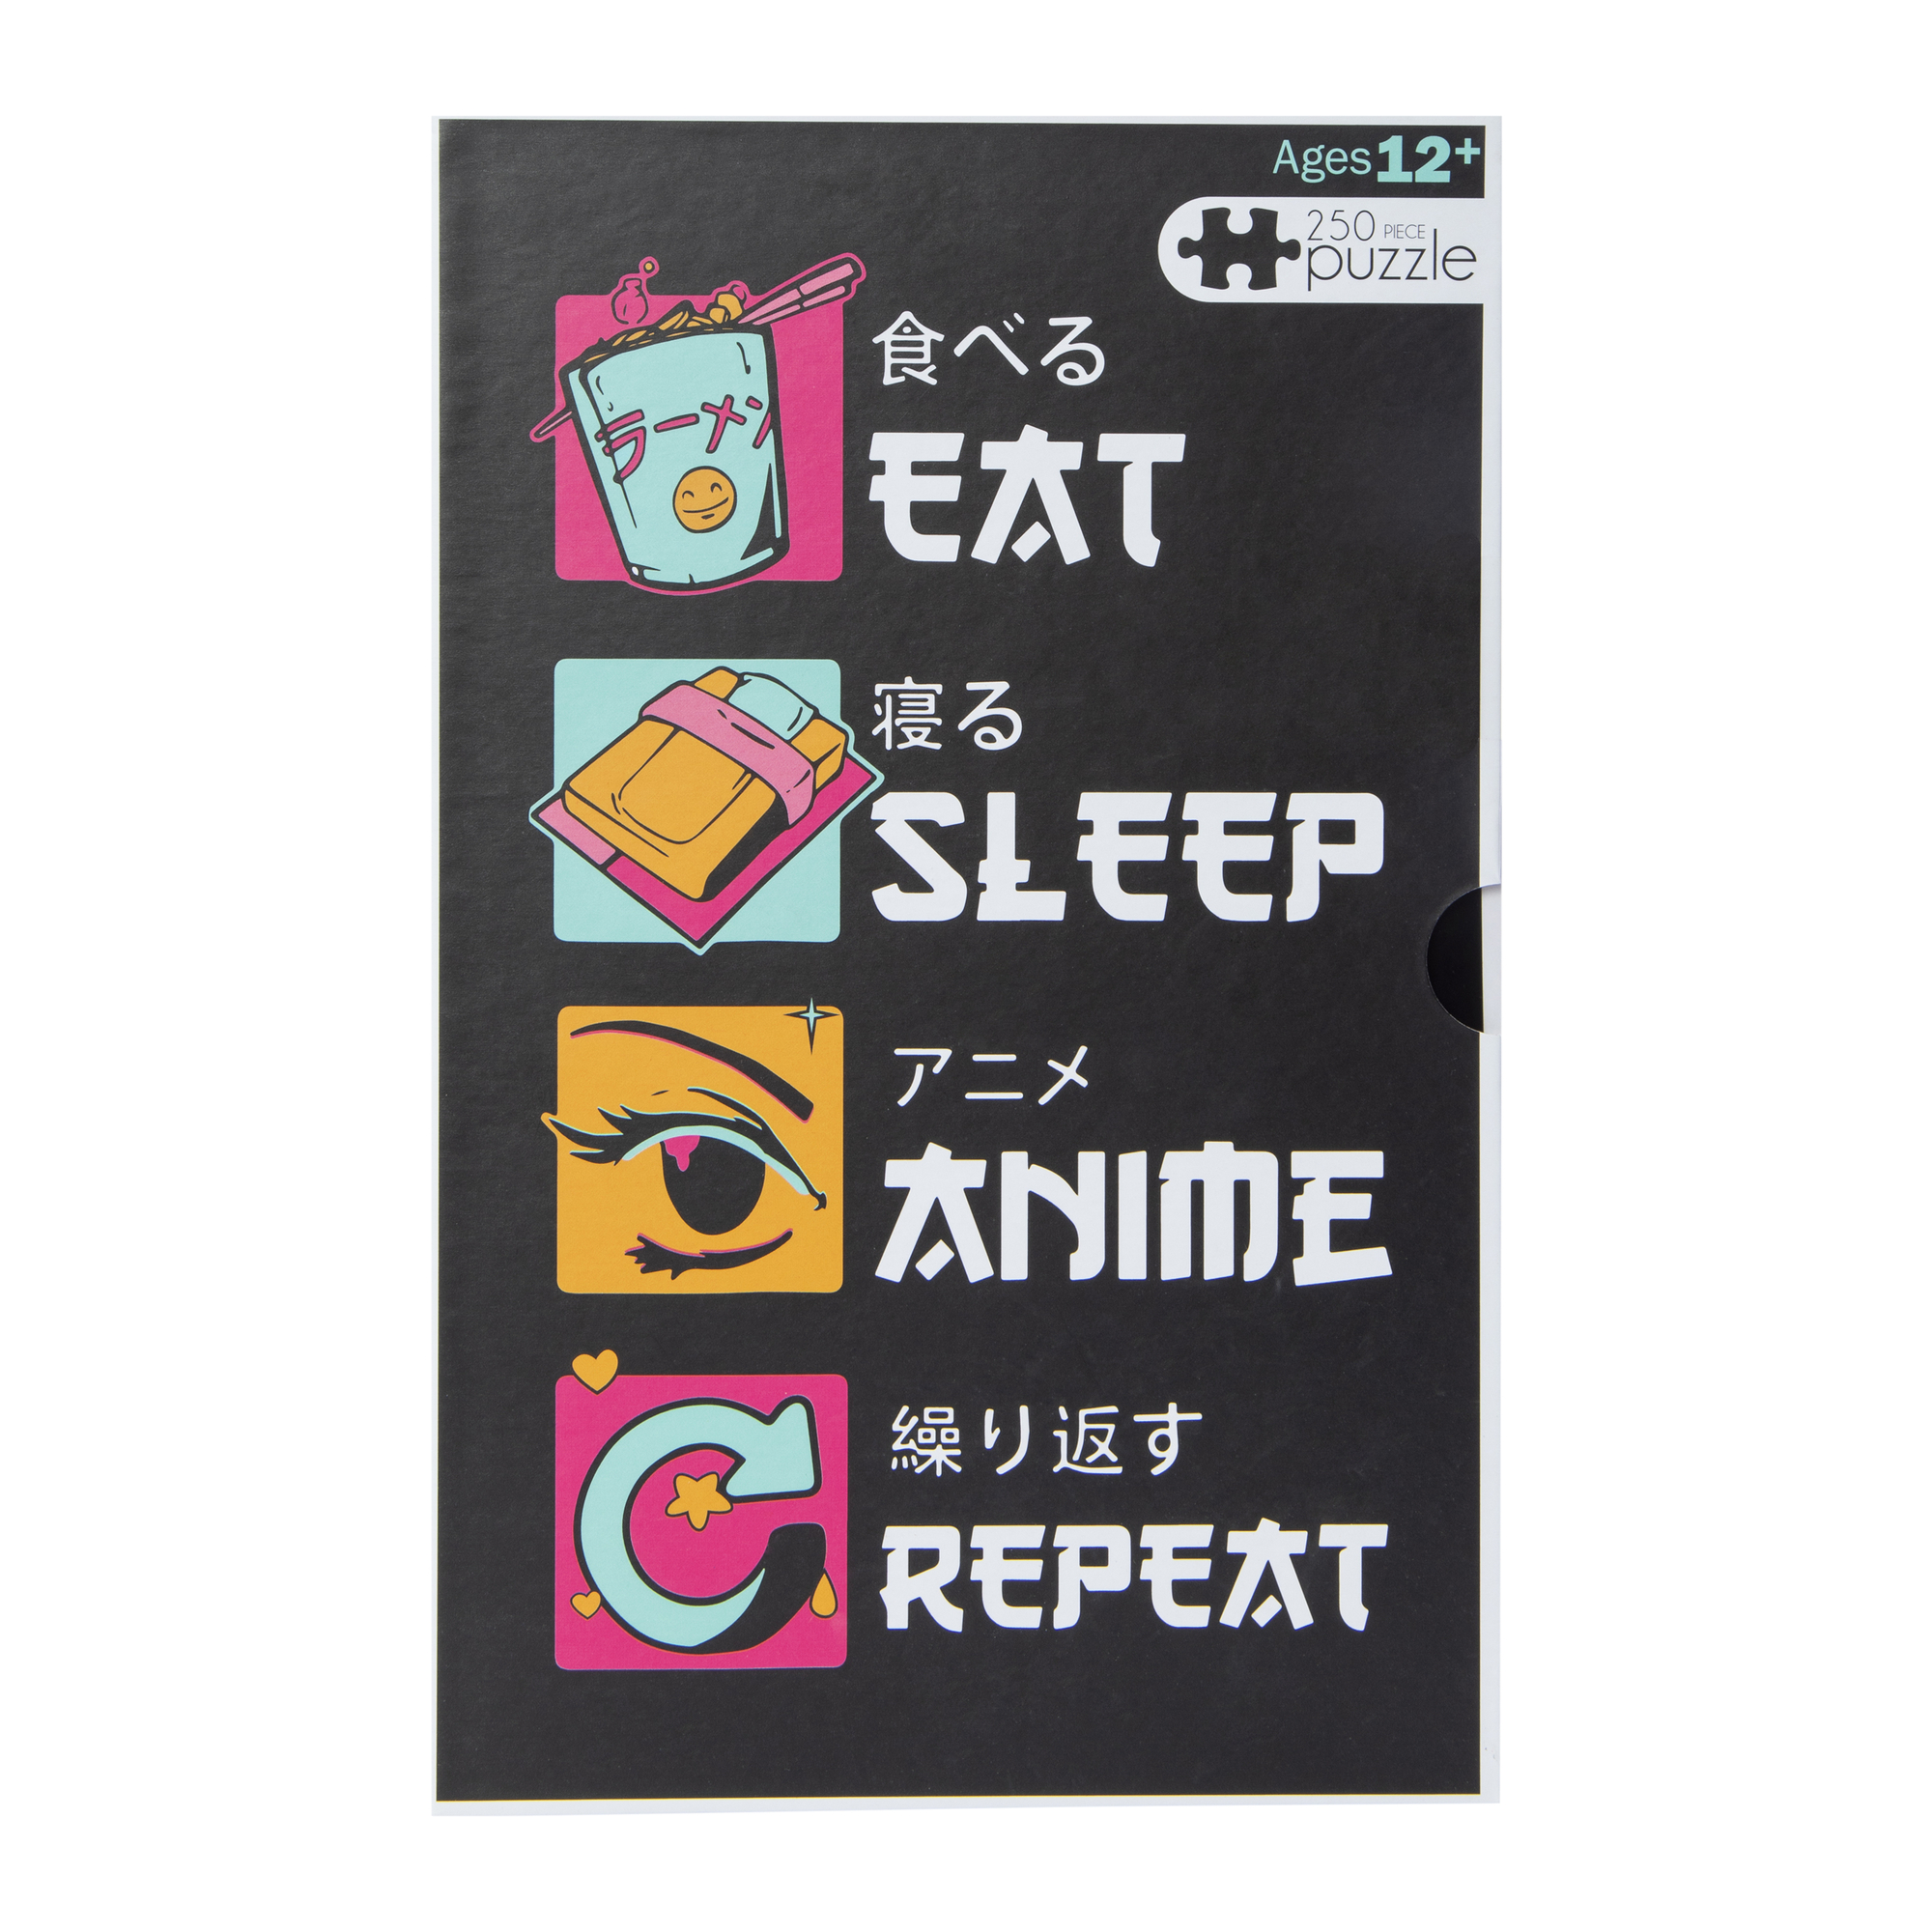 eat sleep anime repeat' jigsaw puzzle 250-pieces